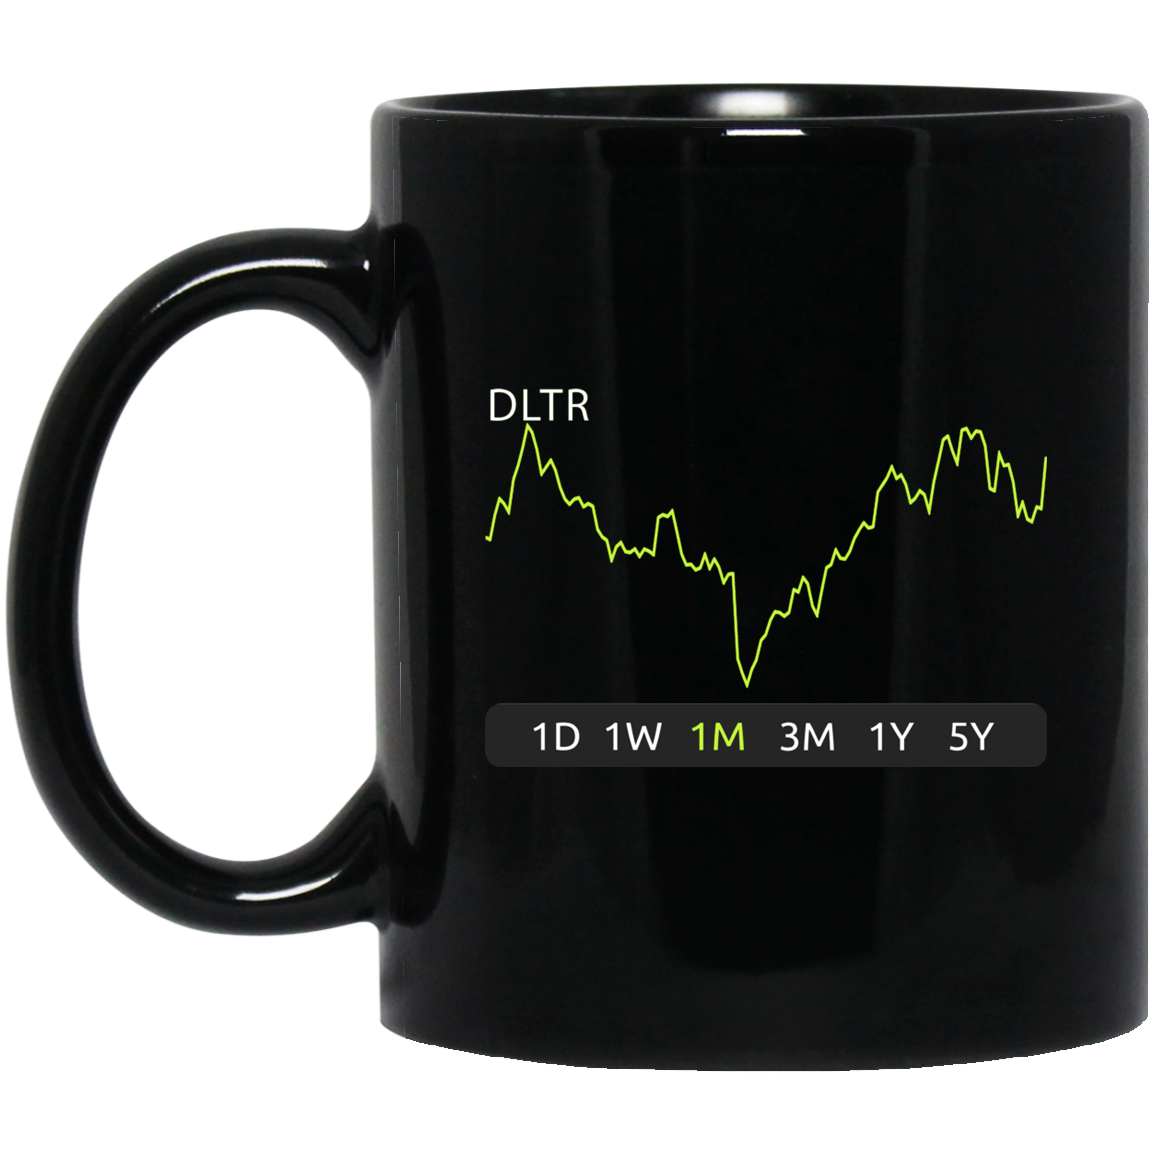 DLTR Stock 1m Mug